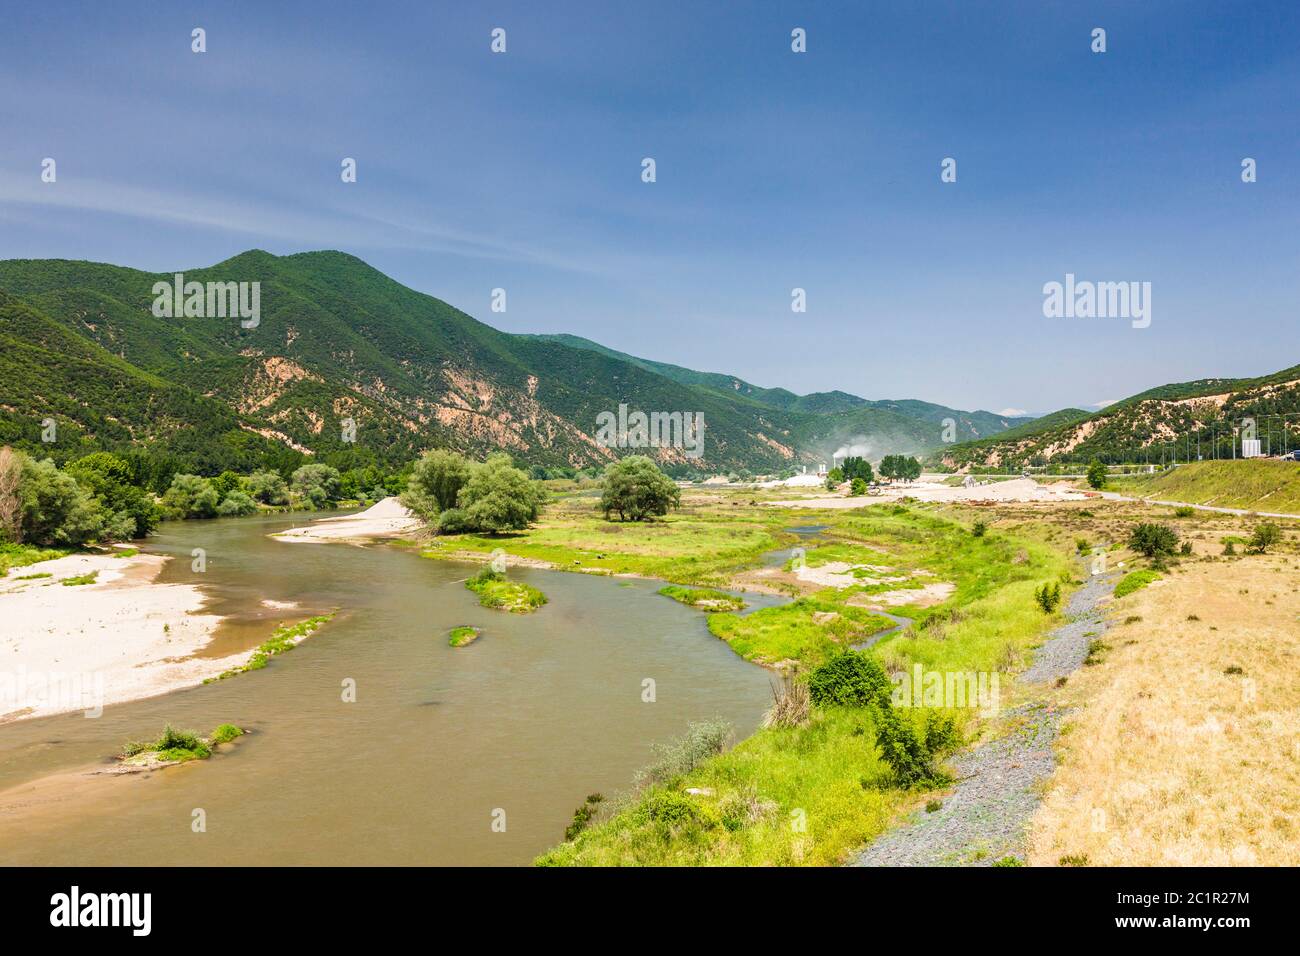 Struma river,ancient strymon river, near Bulgarian border,Landscape of Macedonia region, Suburb of Serres,Central Macedonia,Greece,Europe Stock Photo